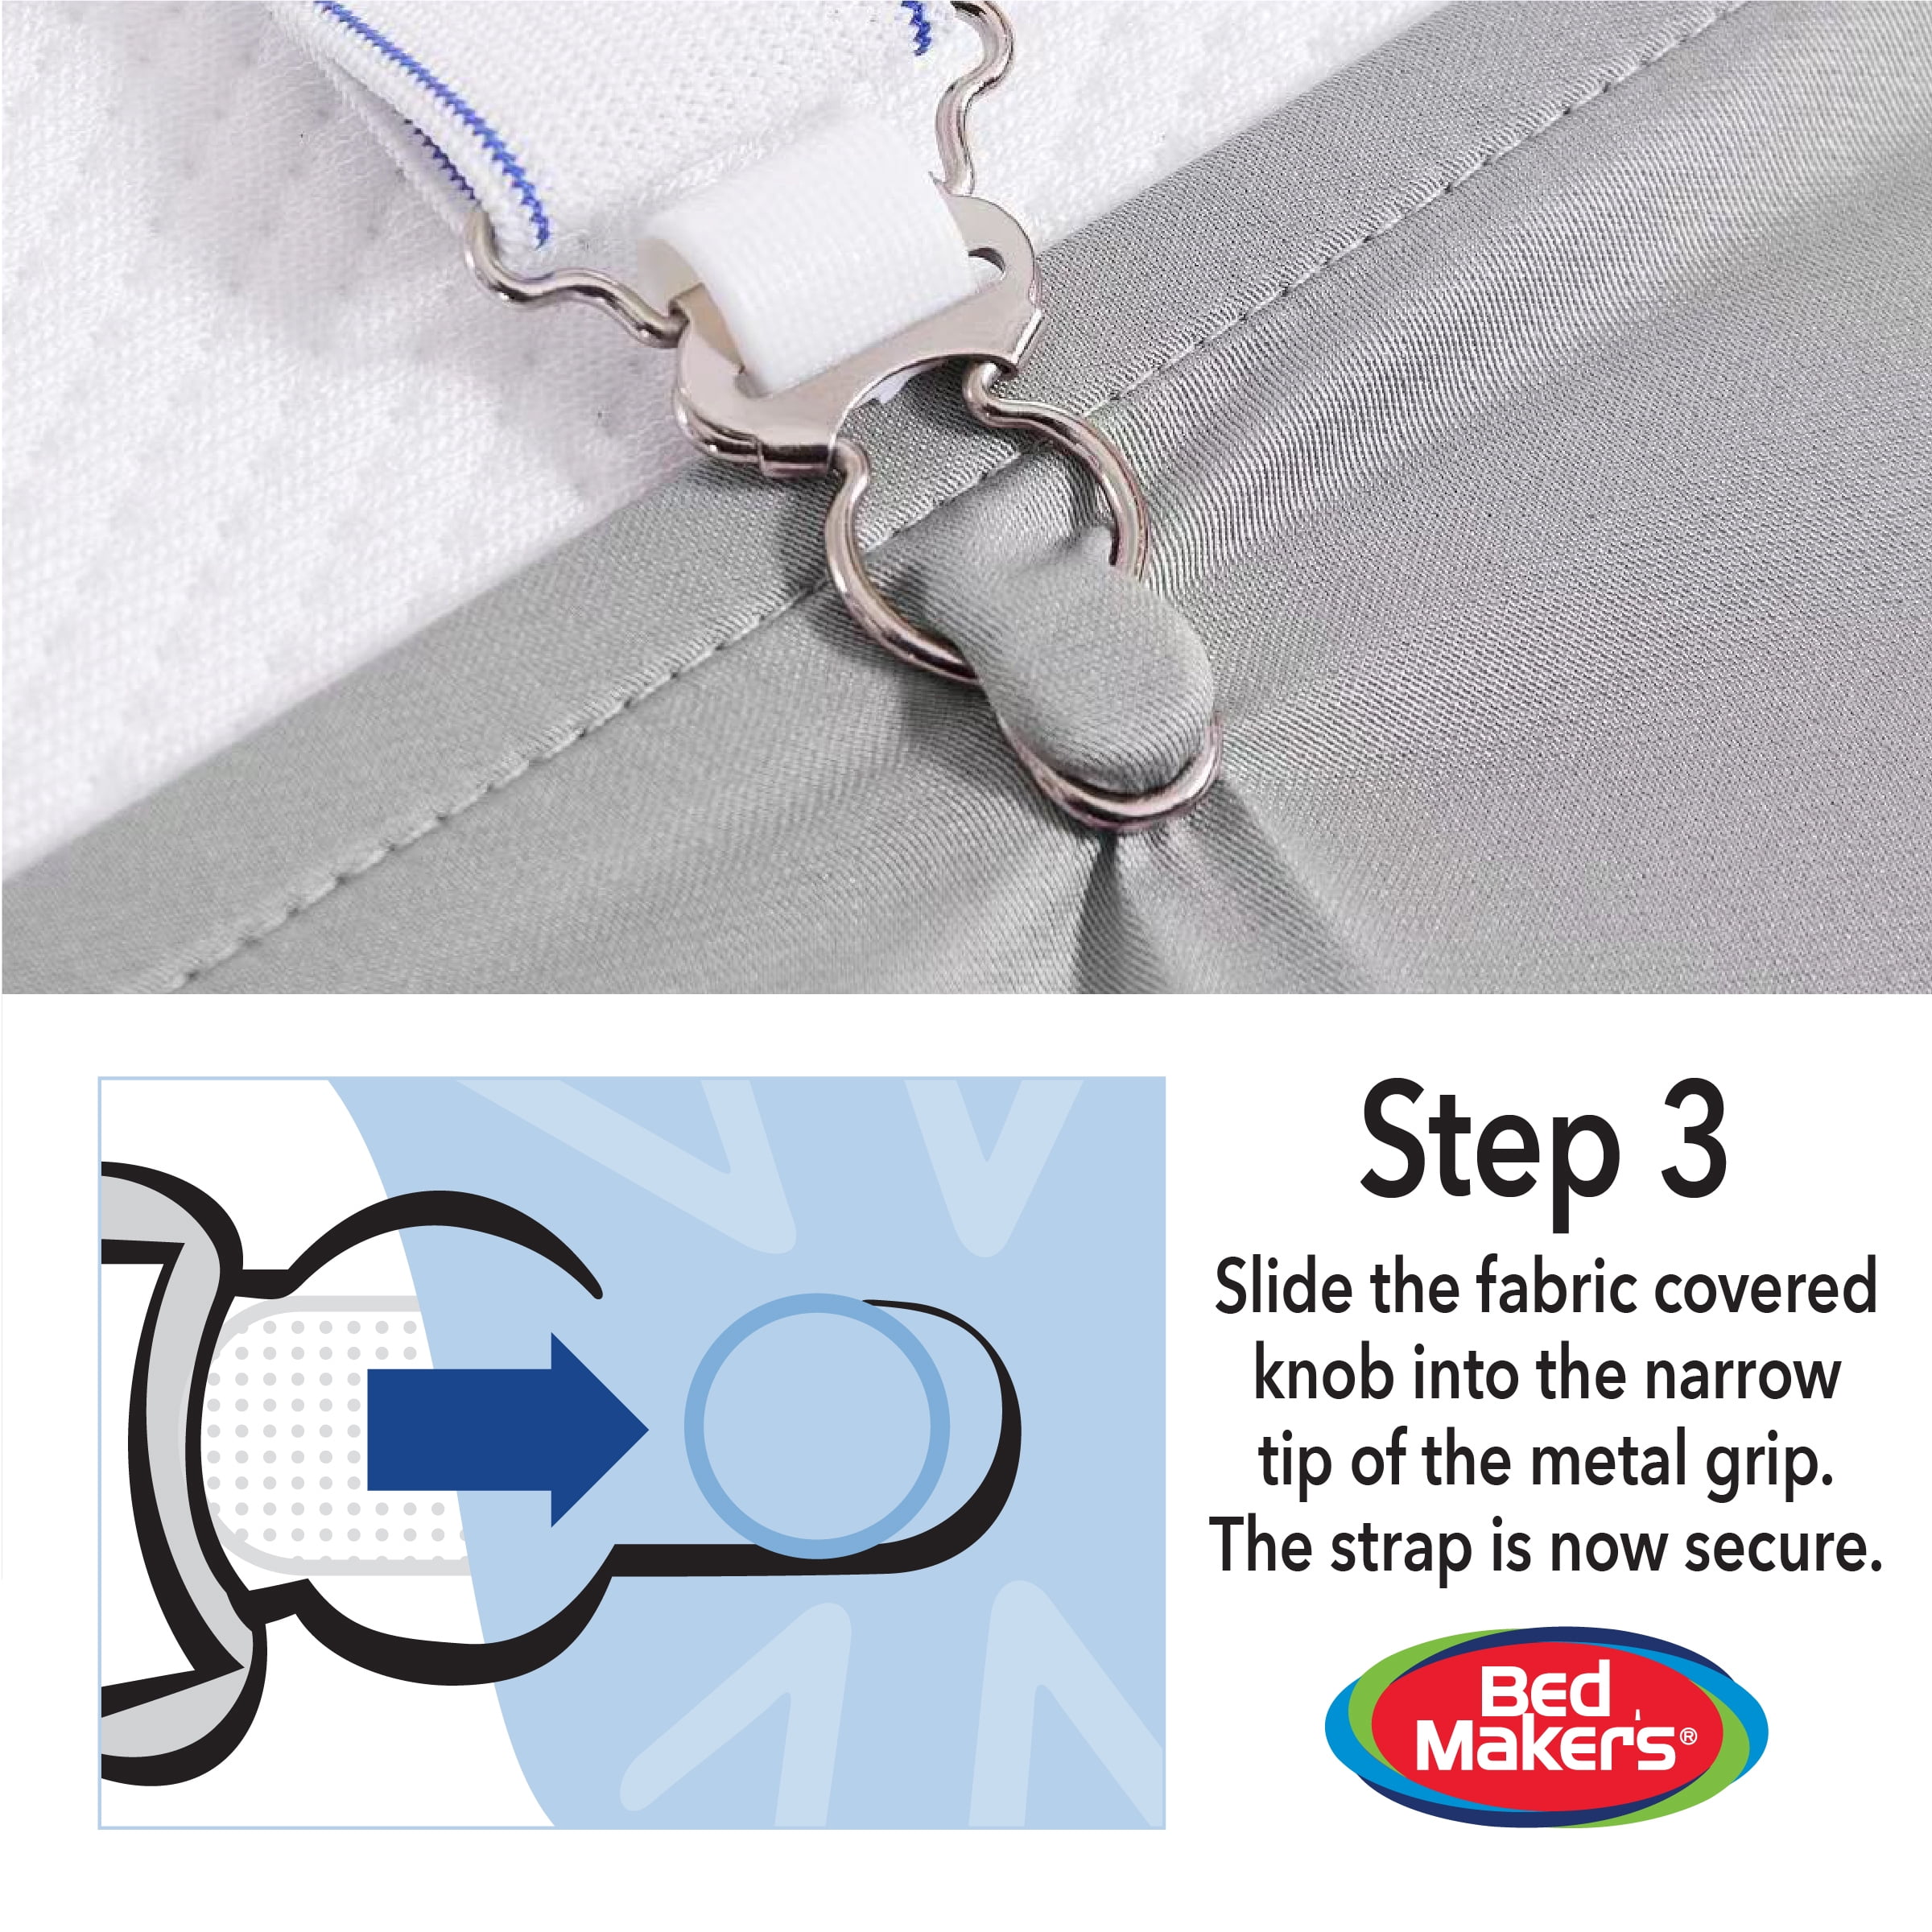 Abripedic Bed Sheet Fasteners 4 Pcs Adjustable Suspenders Straps